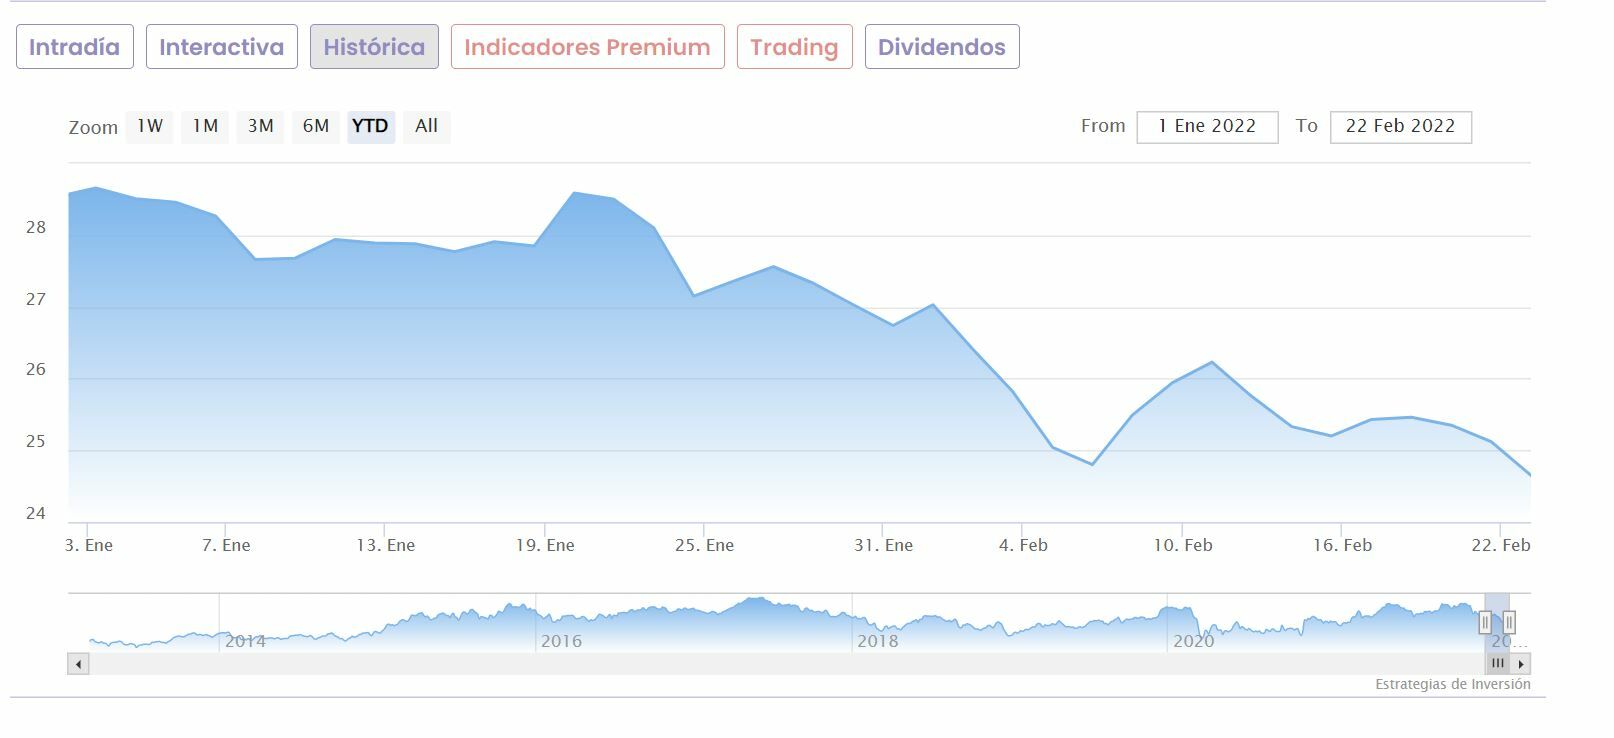 Inditex annual stock price 